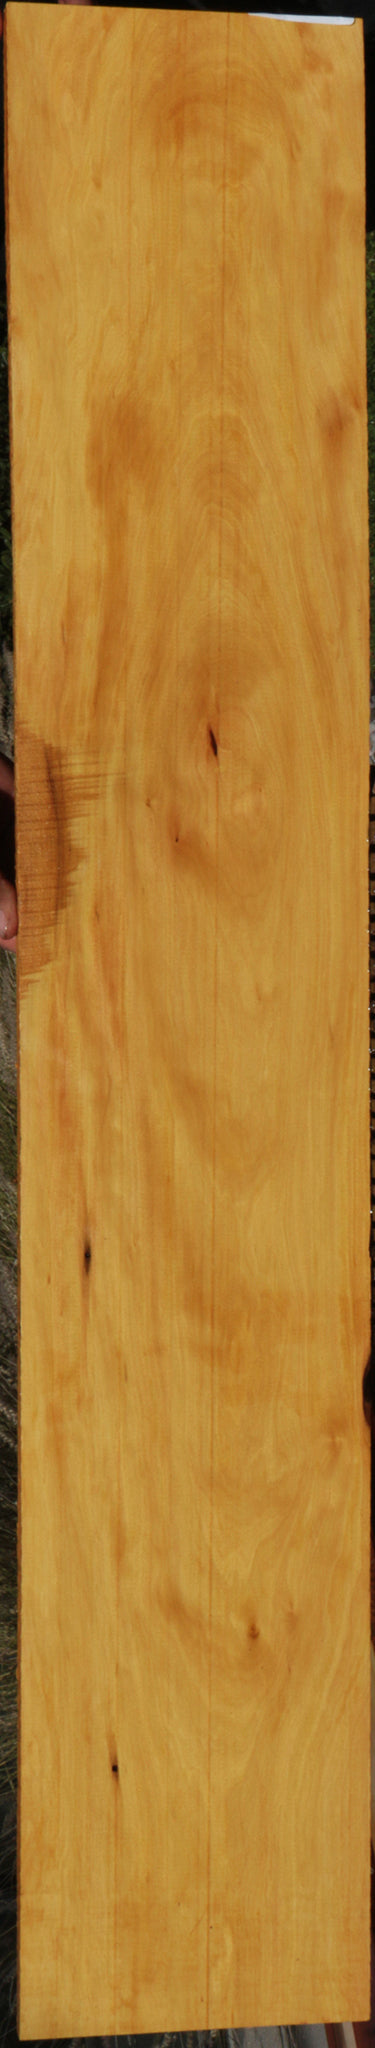 Kirandy Micro Lumber